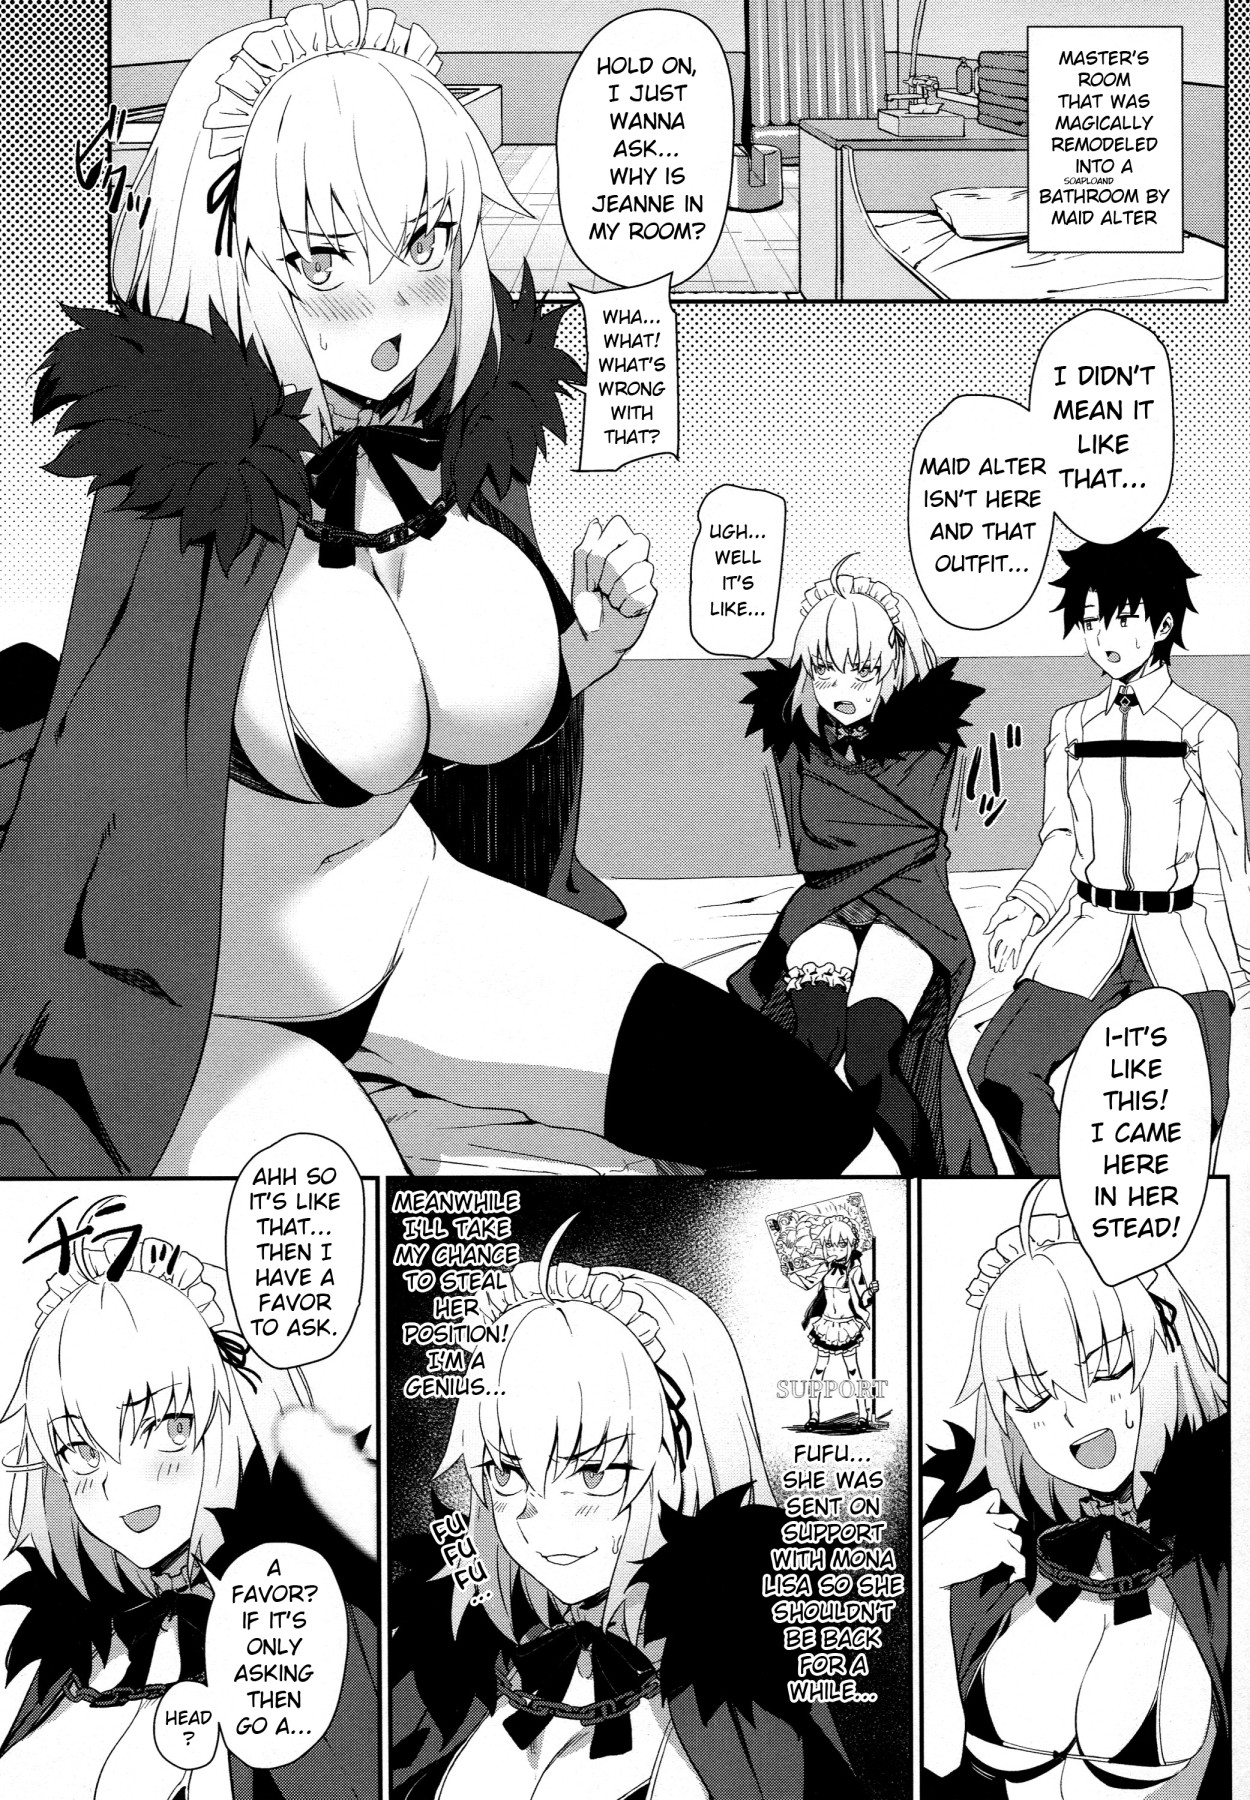 Hentai Manga Comic-Chaldea Soap 2 A Tsundere Maid Who Will Service You As You Like-Read-2